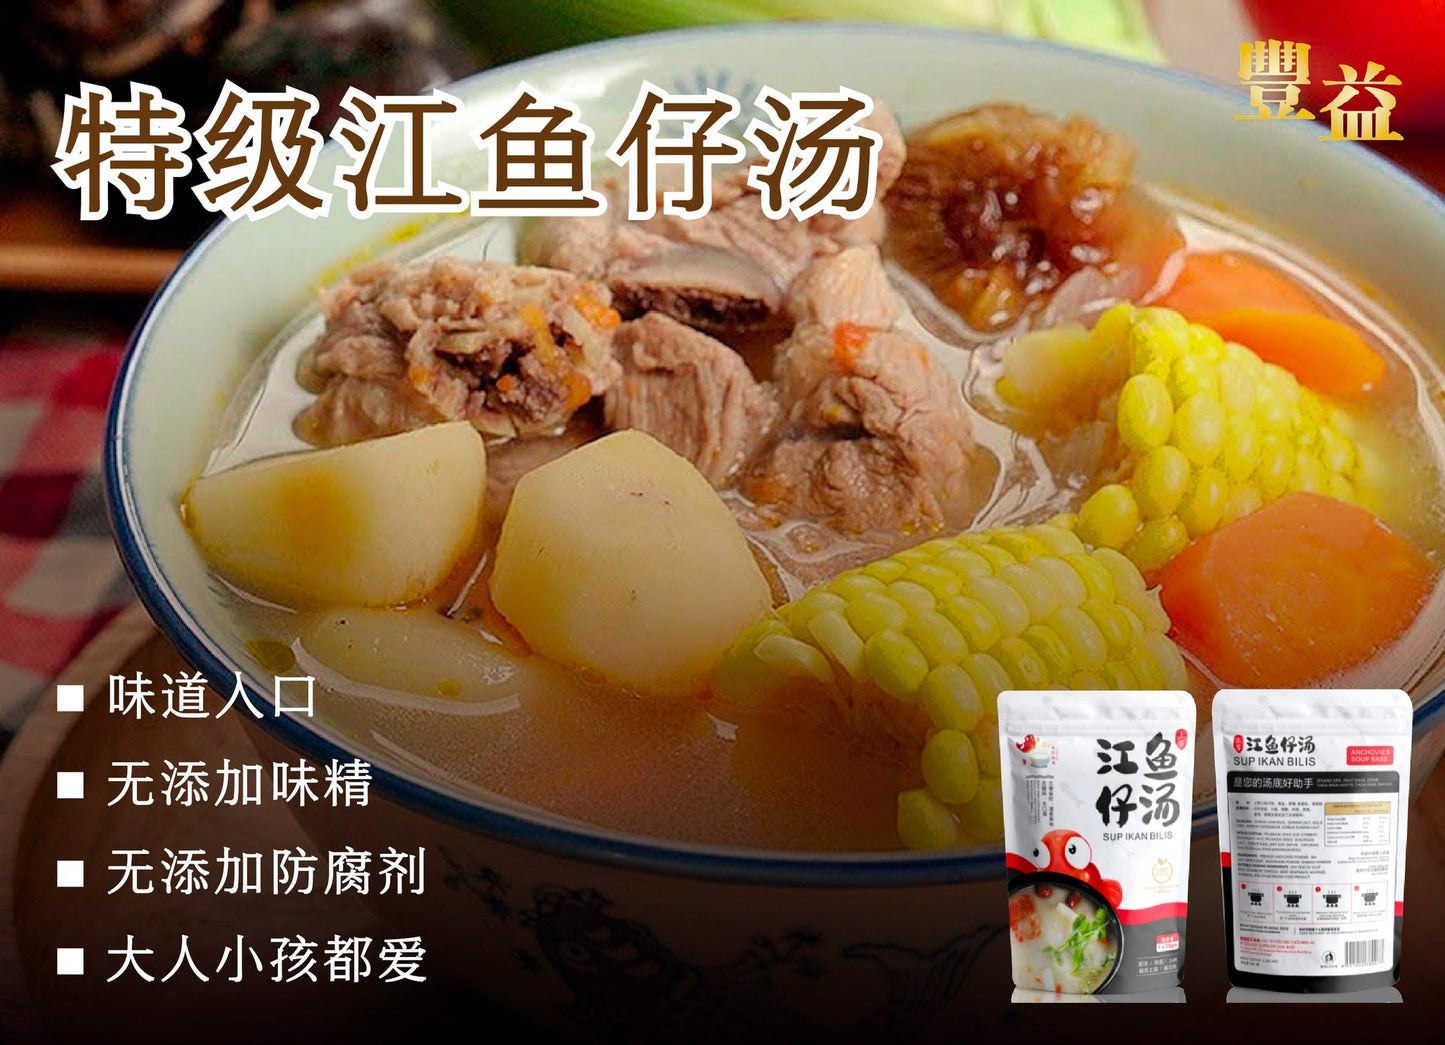 Premium Anchovies Soup Base / 上等江鱼仔汤包 (25g x 5) - Fish Club